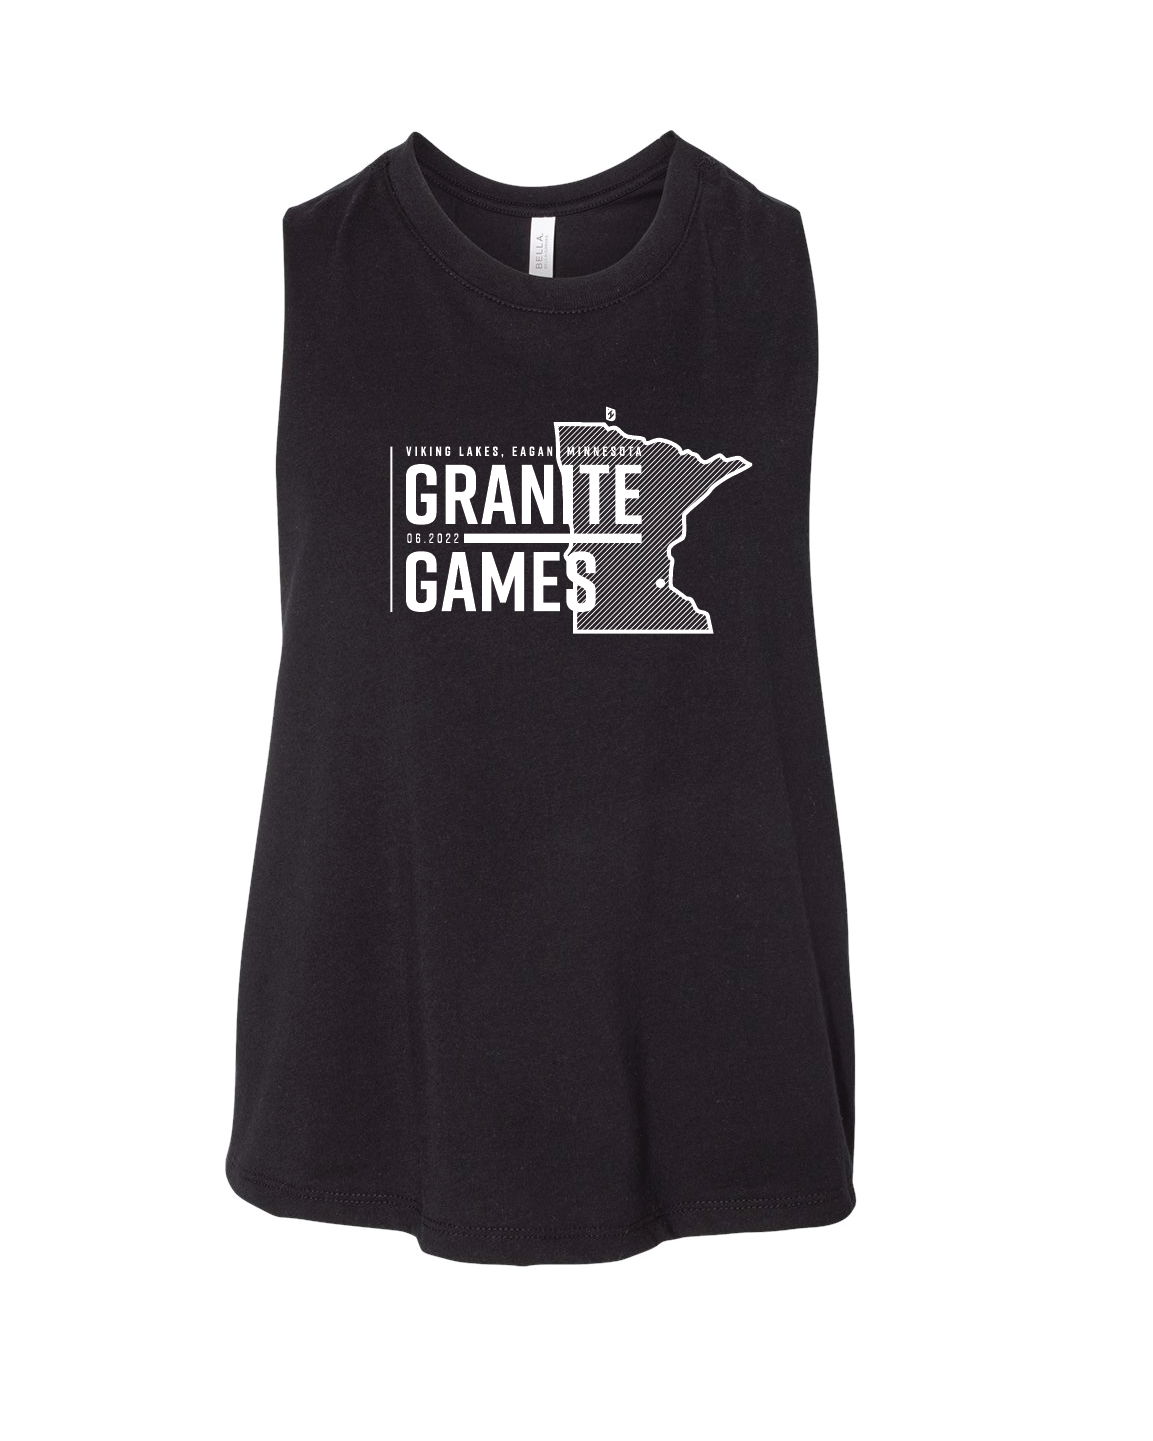 Official Granite Games Ladies Tank